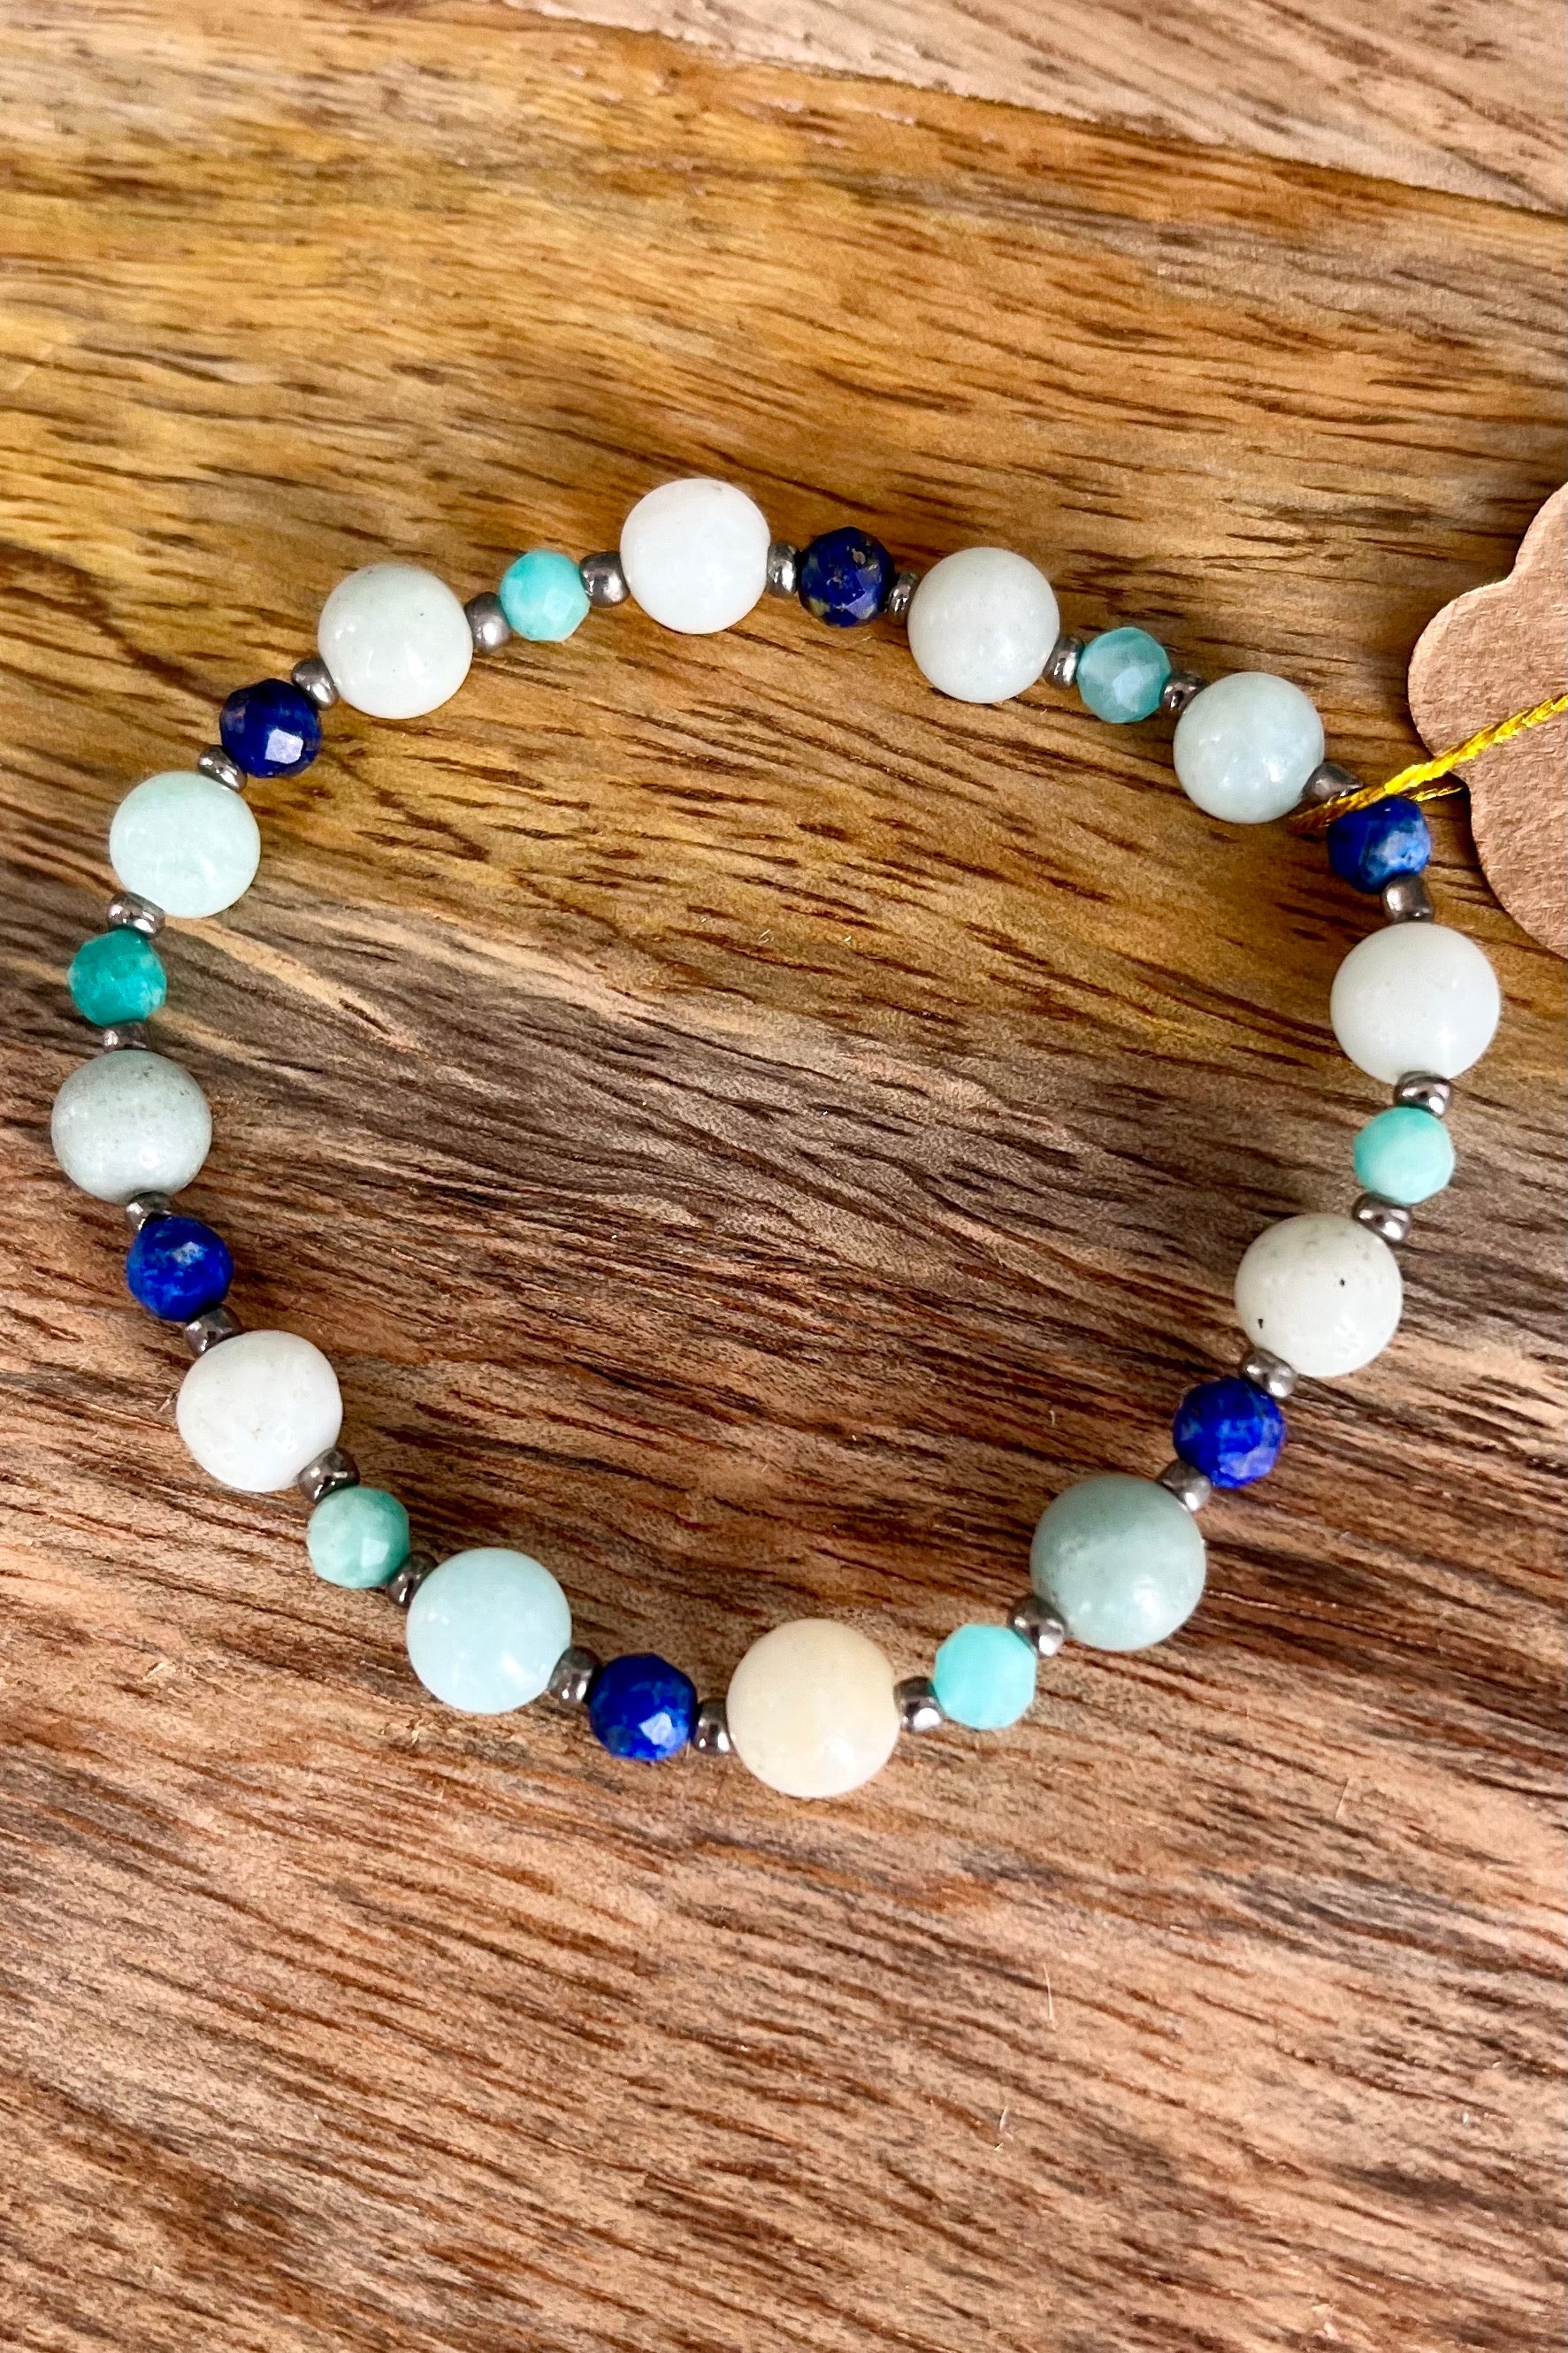 Indian Agate, Amazonite & Lapis Lazuli Stone Bead Bracelet jewelry from GemCadet